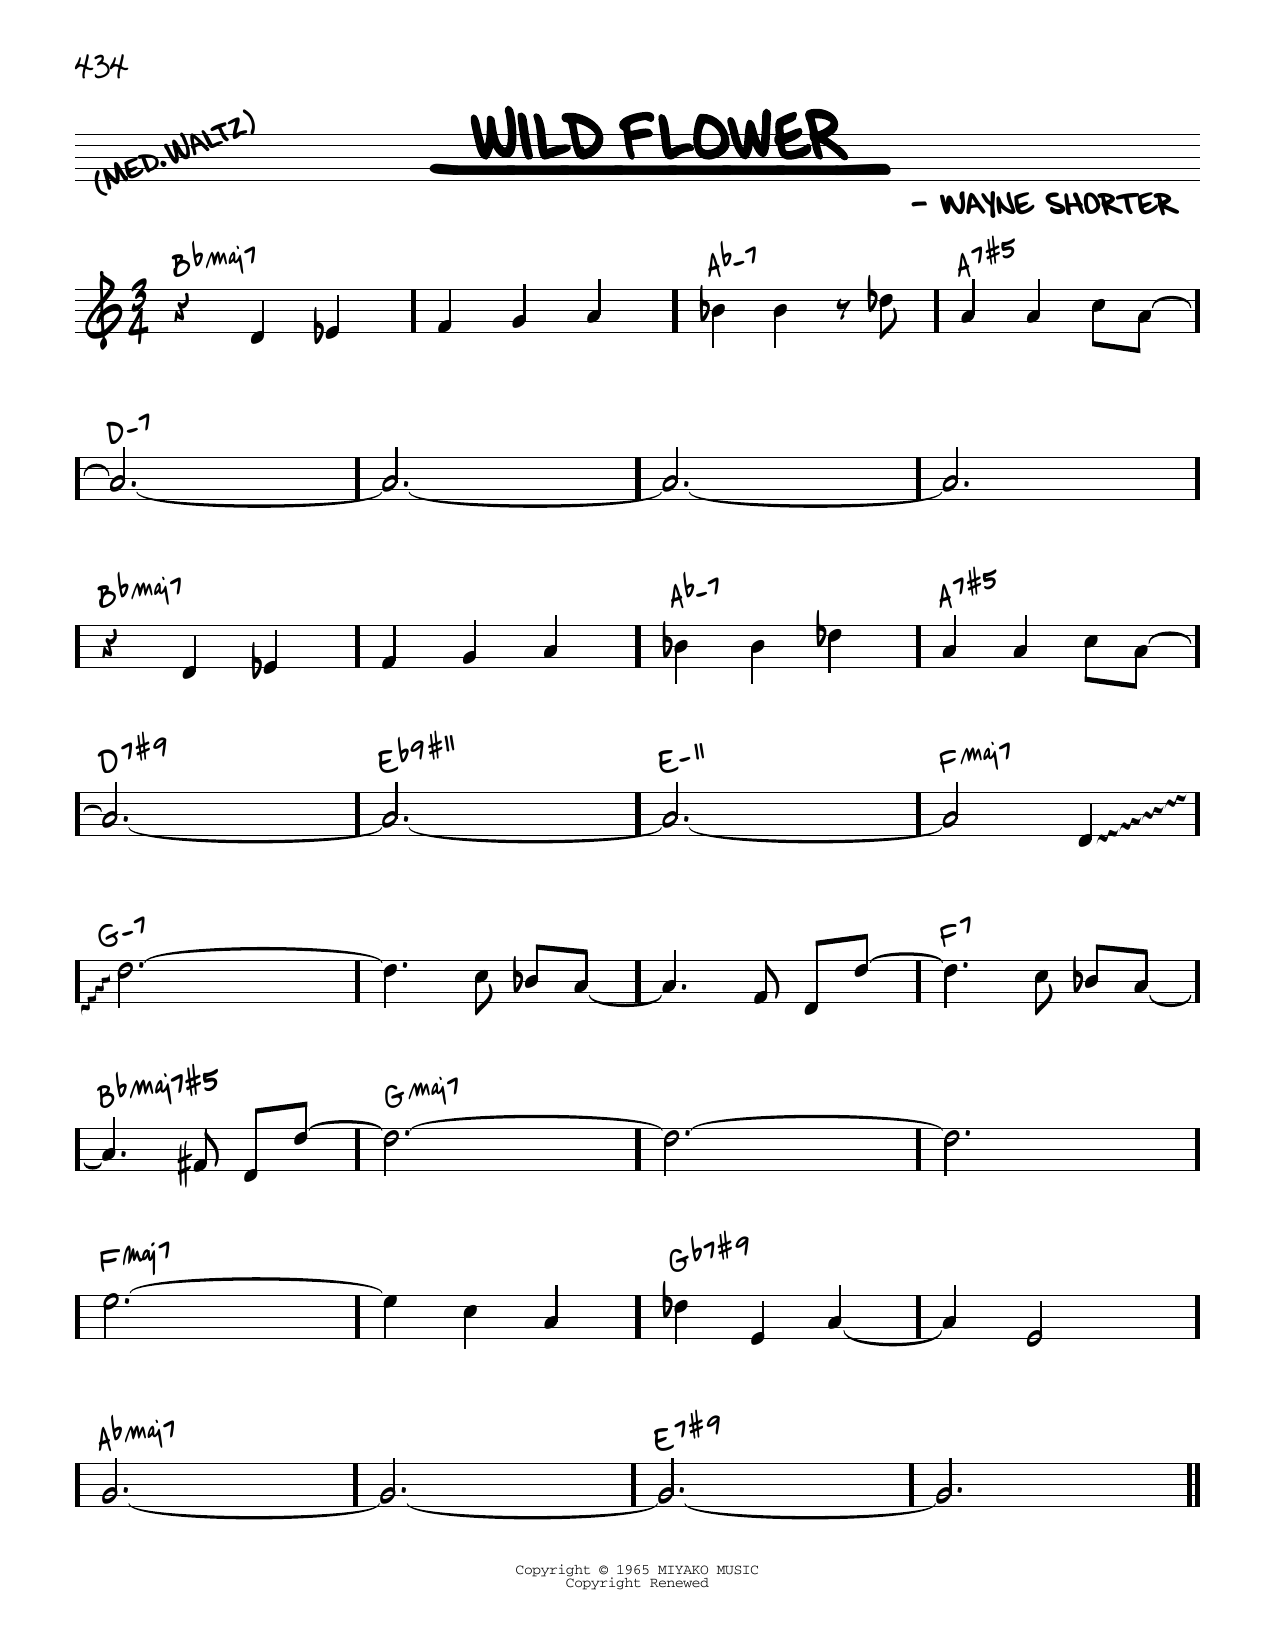 Wayne Shorter Wild Flower [Reharmonized version] (arr. Jack Grassel) Sheet Music Notes & Chords for Real Book – Melody & Chords - Download or Print PDF